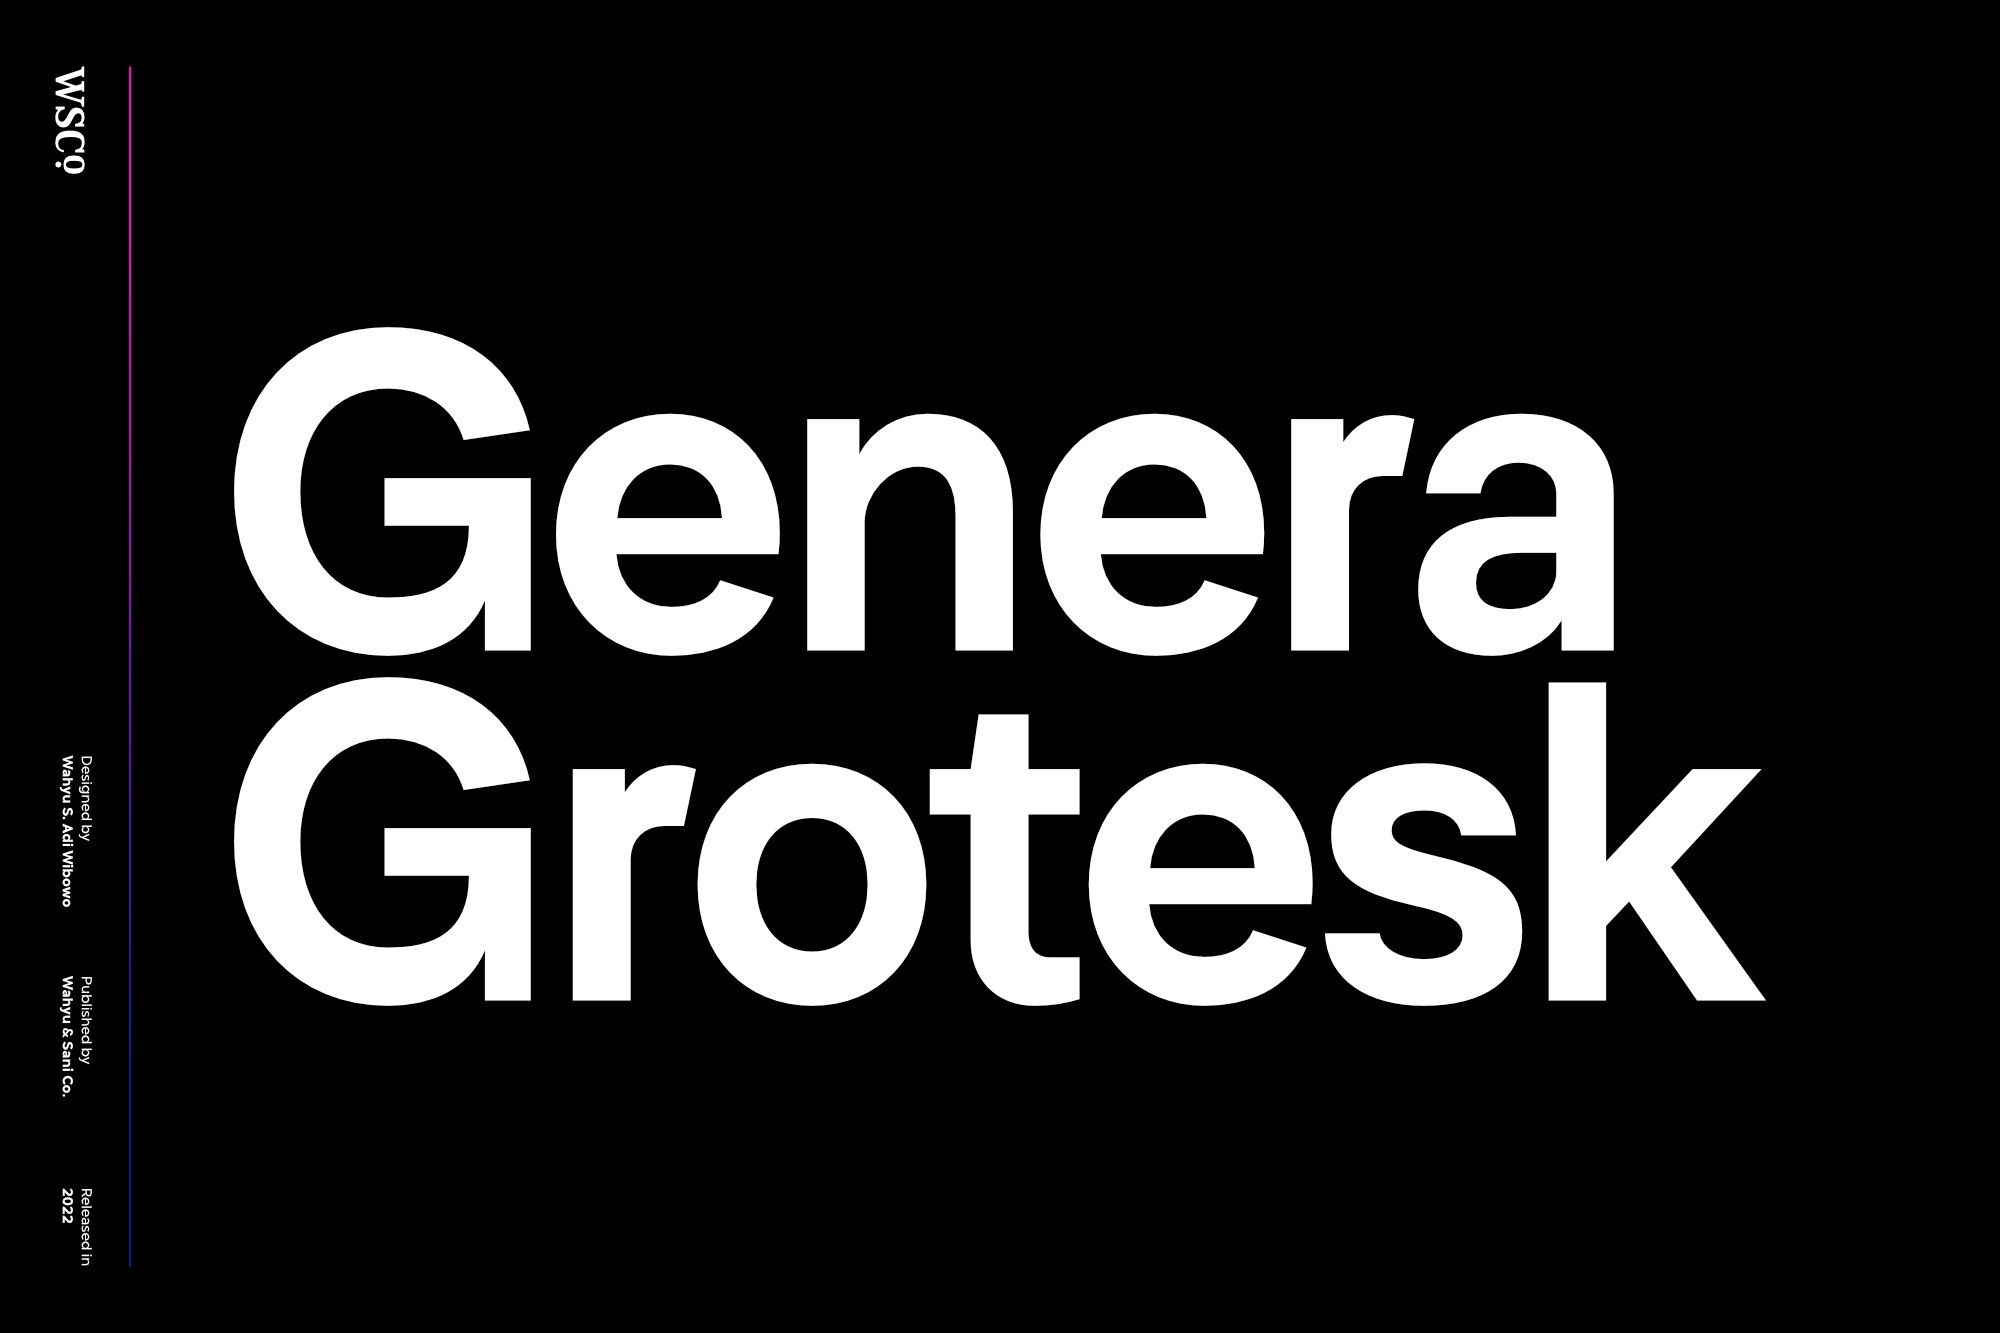 Genera Grotesk | Workhorse Typeface cover image.